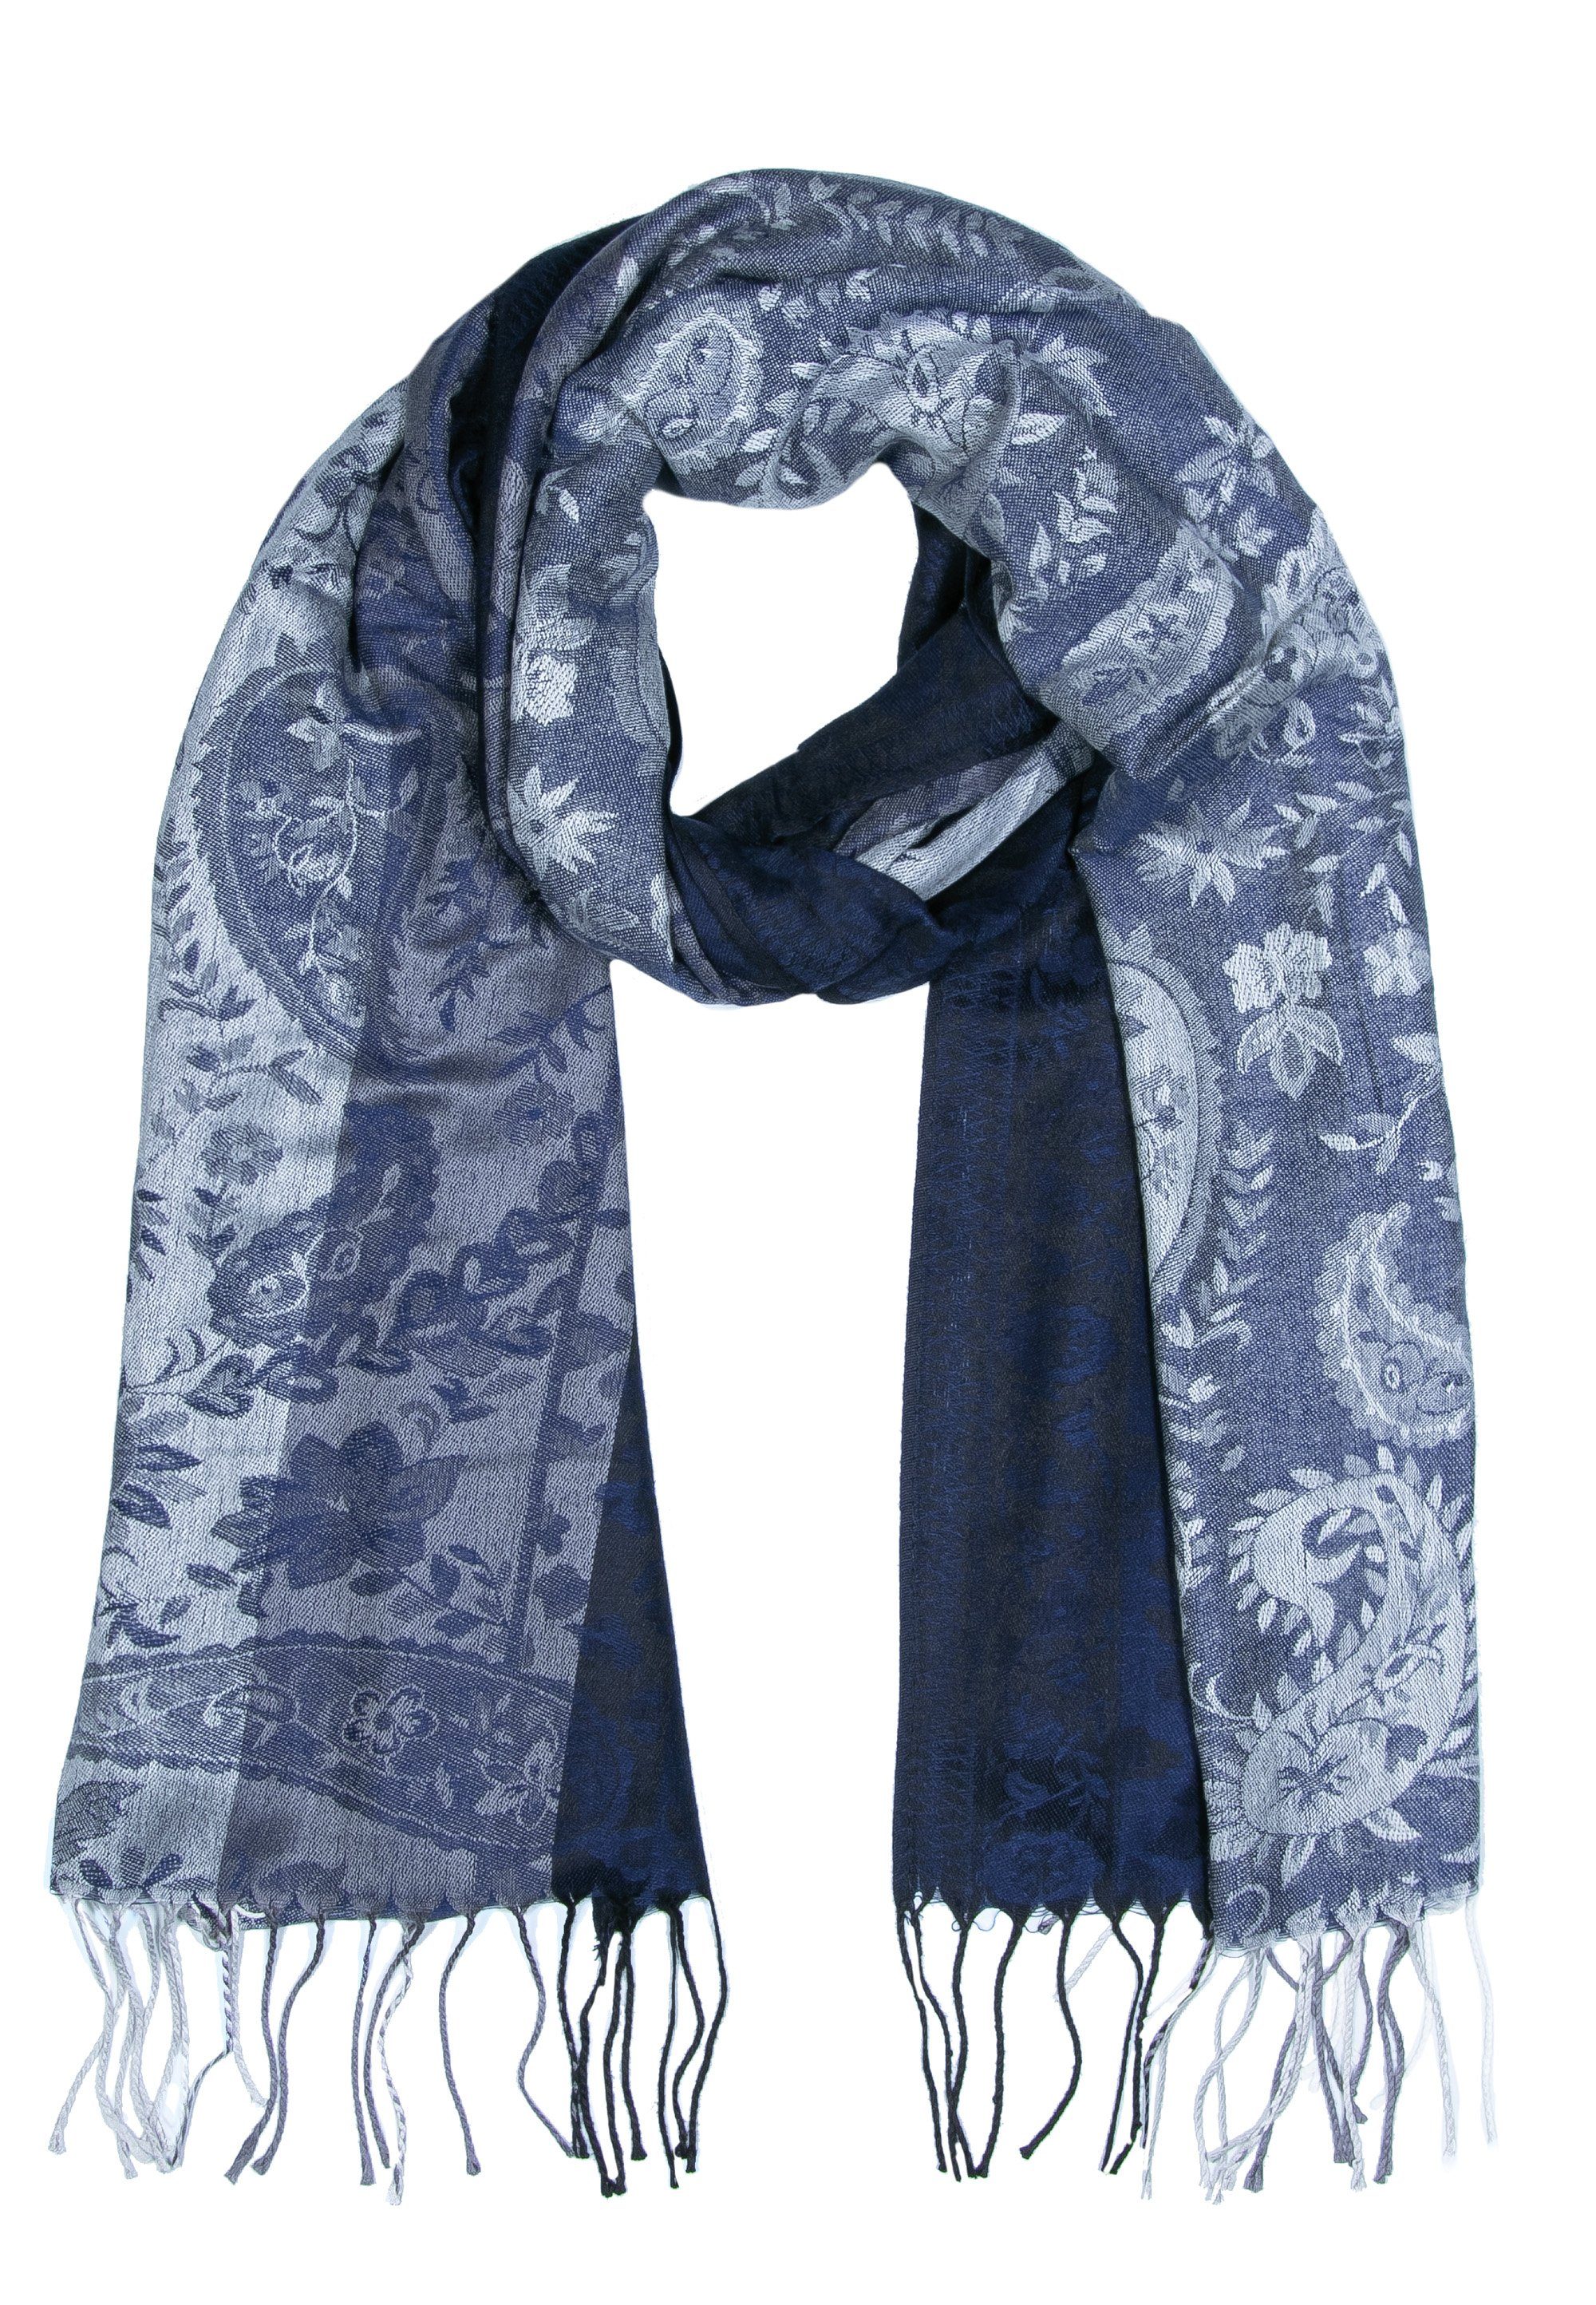 Goodman Design Modeschal Schal Romantik mit lebendigen Farben, Sehr hochwertiges Material